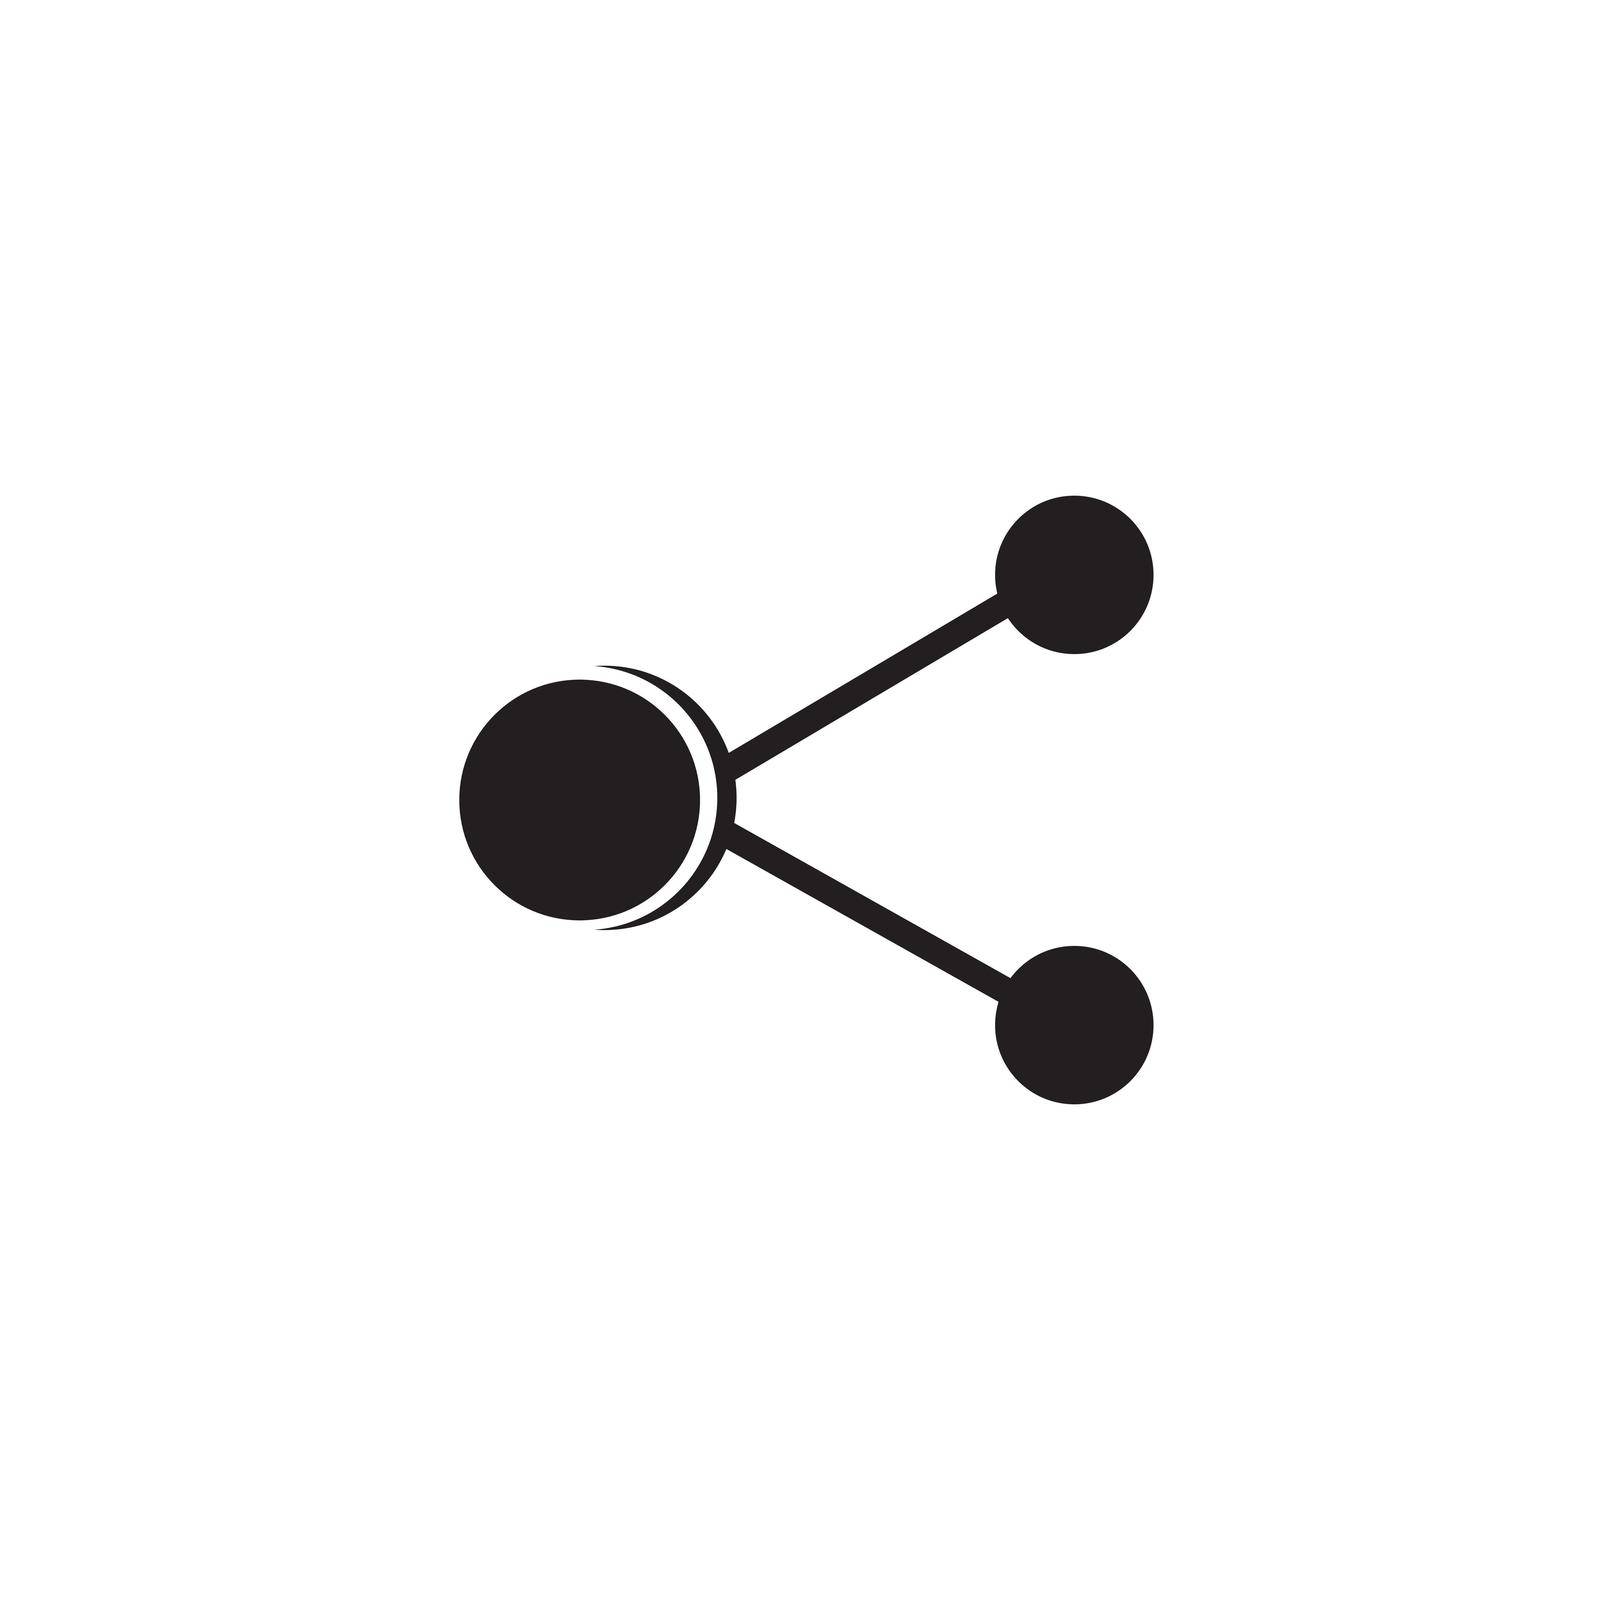 Like, share icon logo vector design